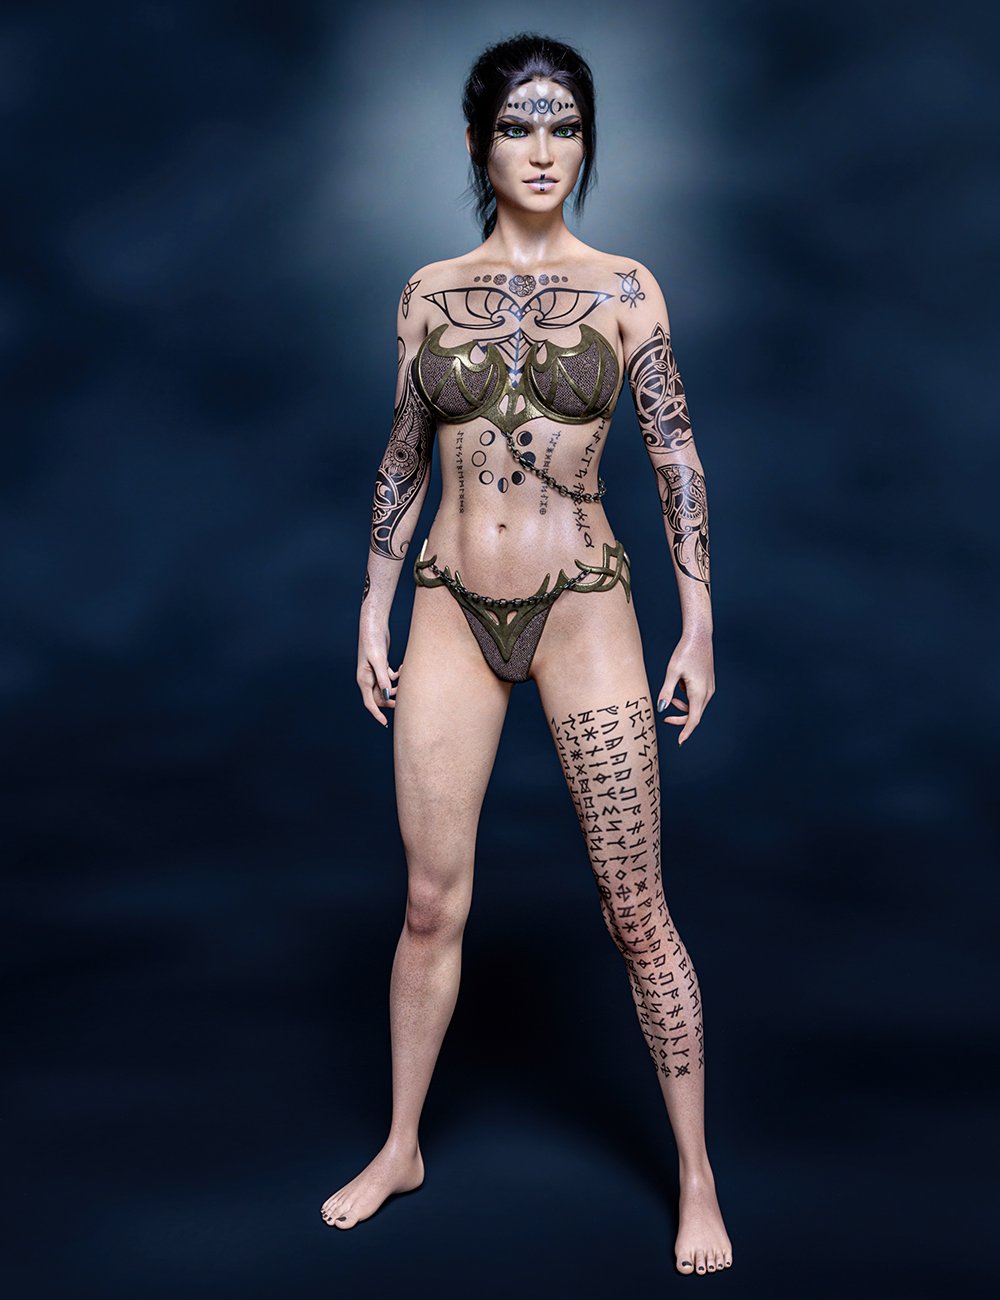 Genesis 8.1 Female Centaur and Violaine by: Colm Jackson, 3D Models by Daz 3D